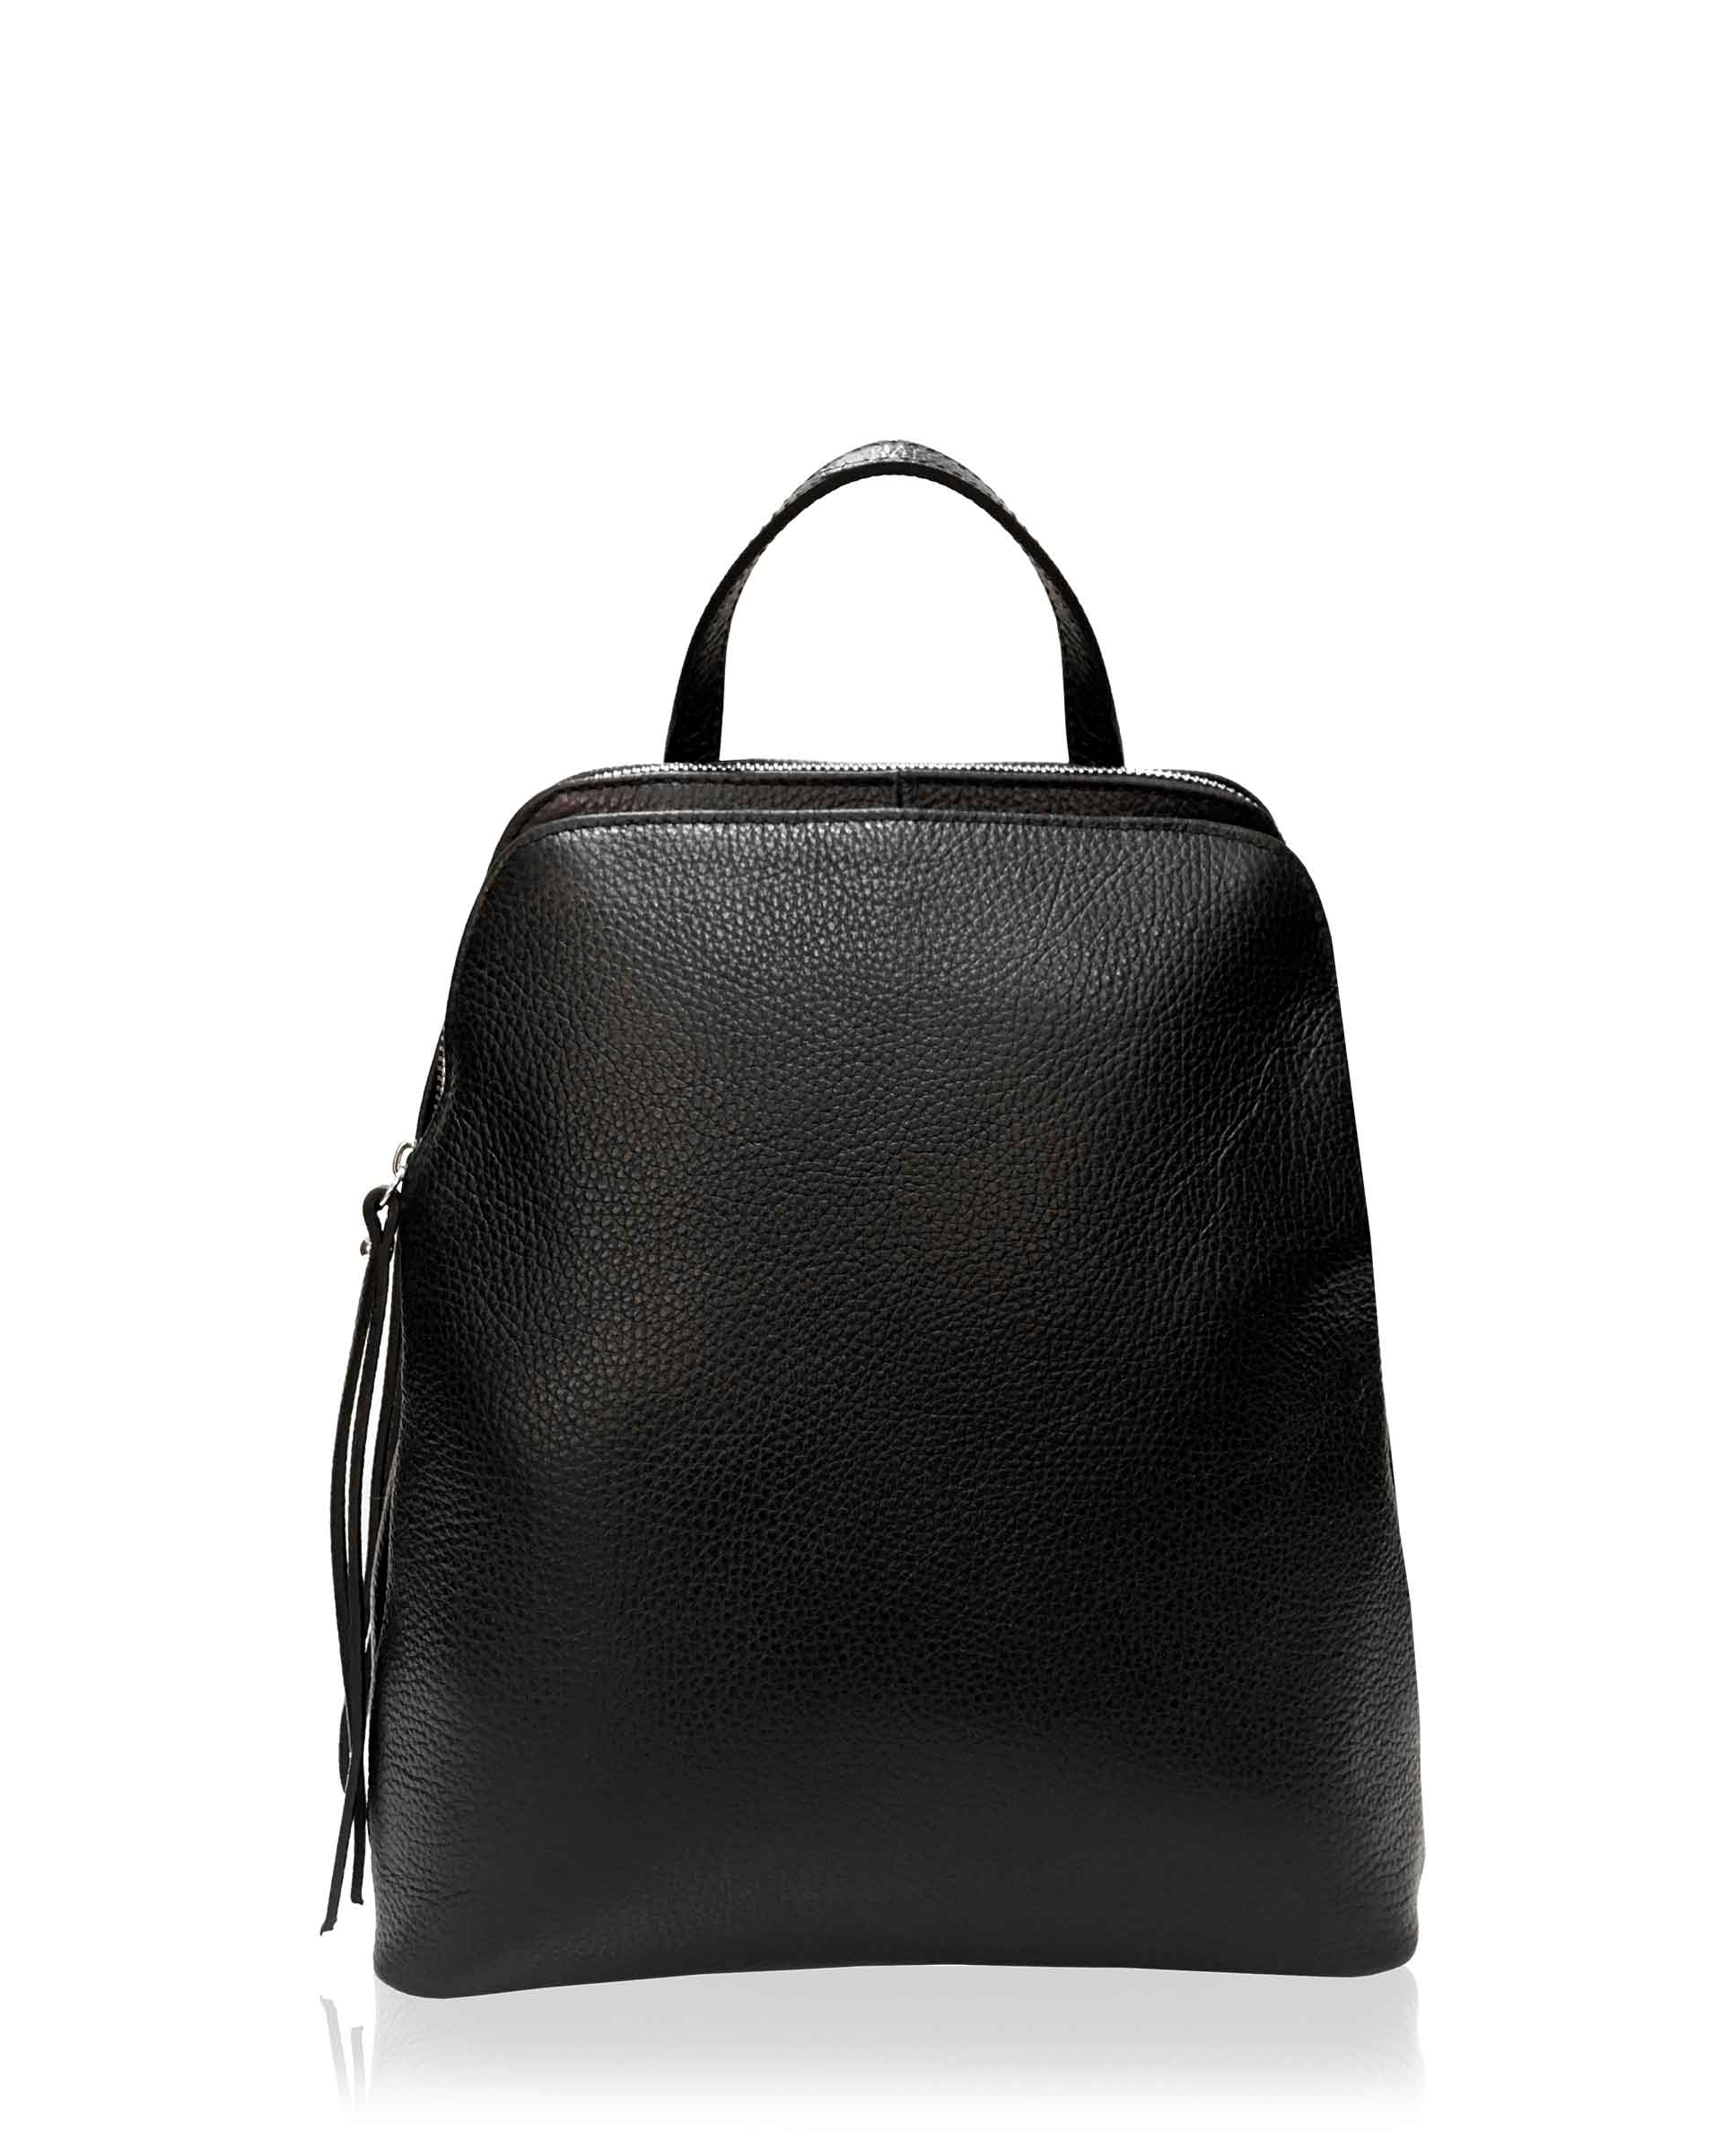 lsf-leather-backpack-106.jpg